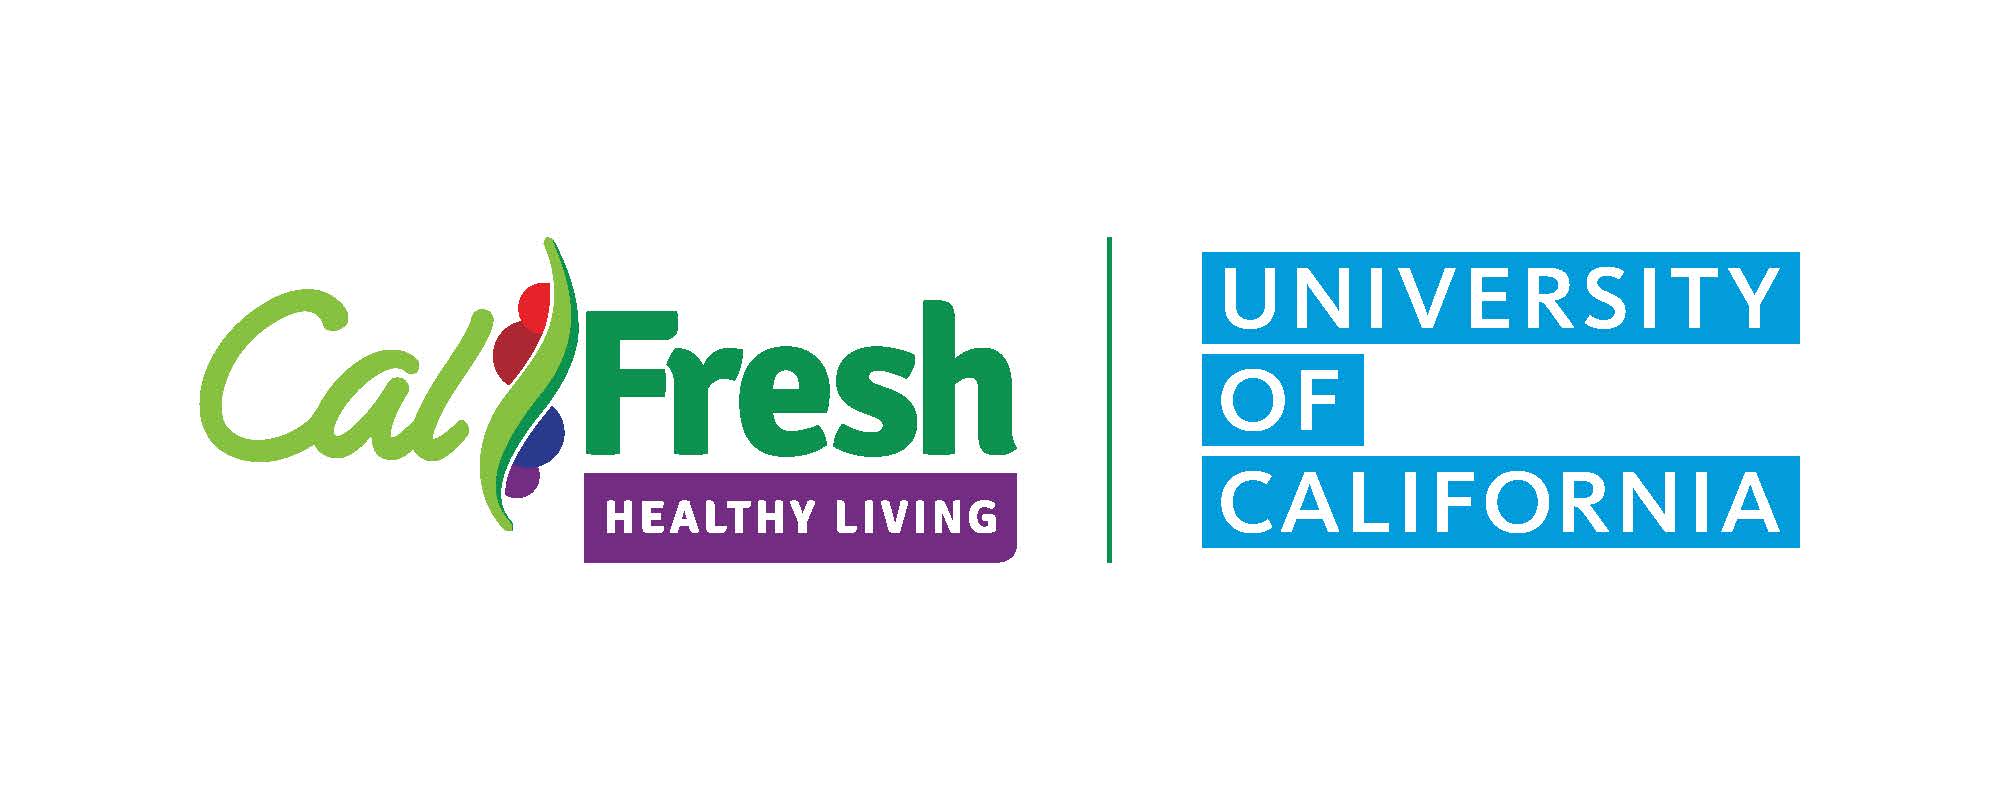 Cal Fresh Healthy Living, University of California Logo